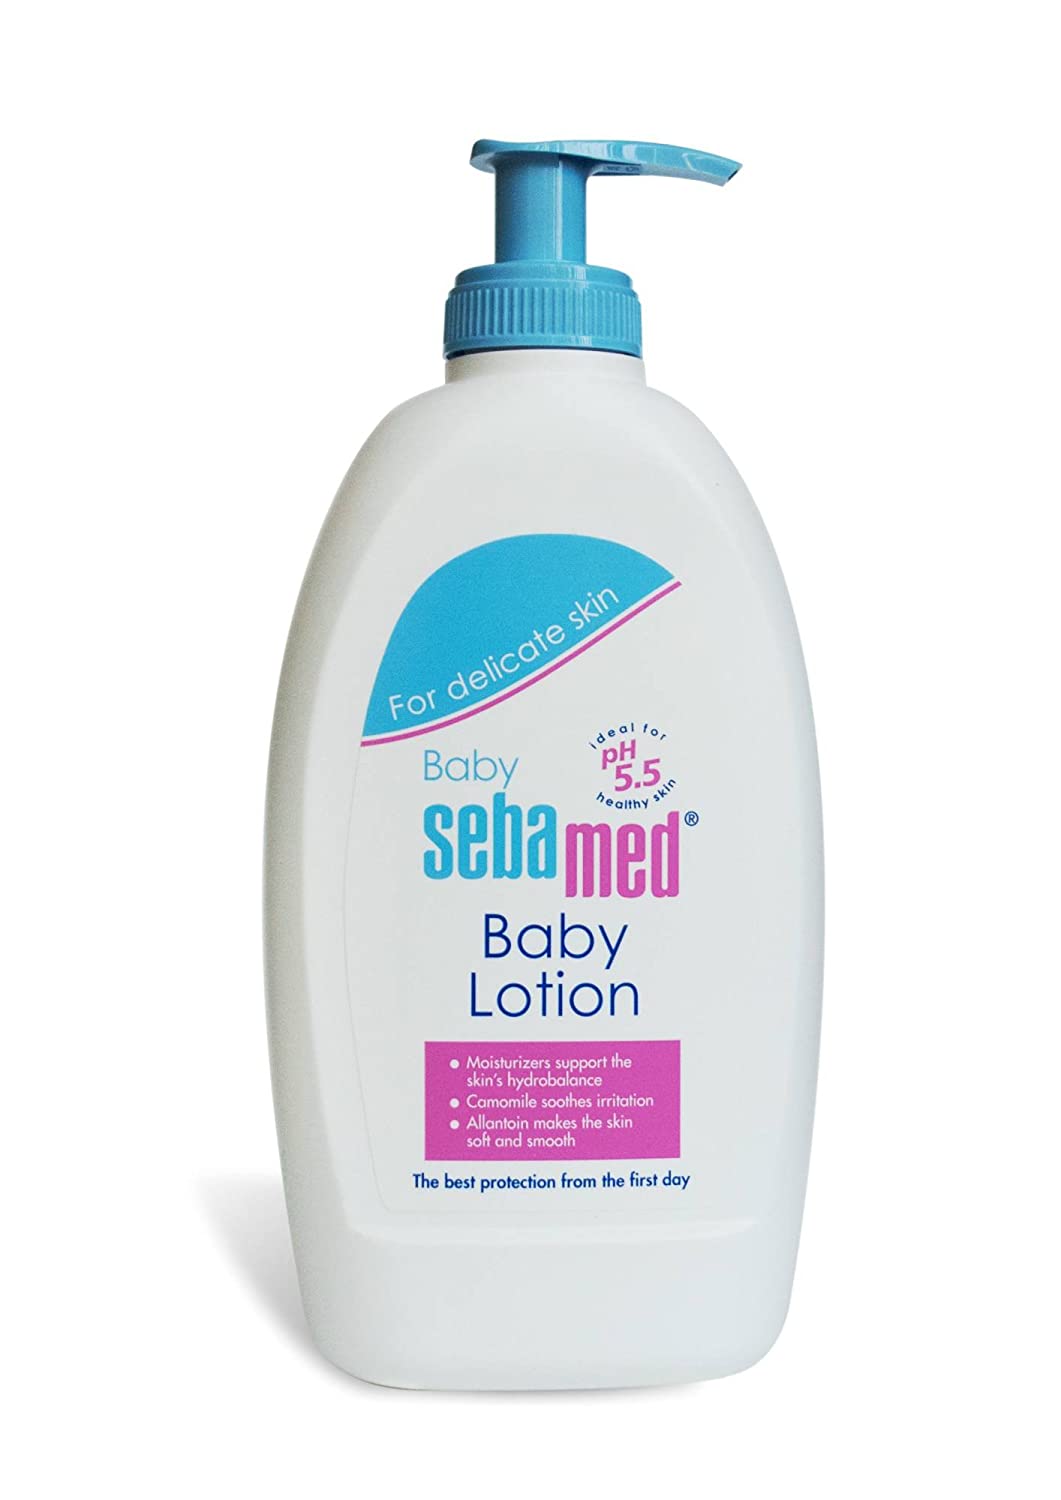 Sebamed baby lotion